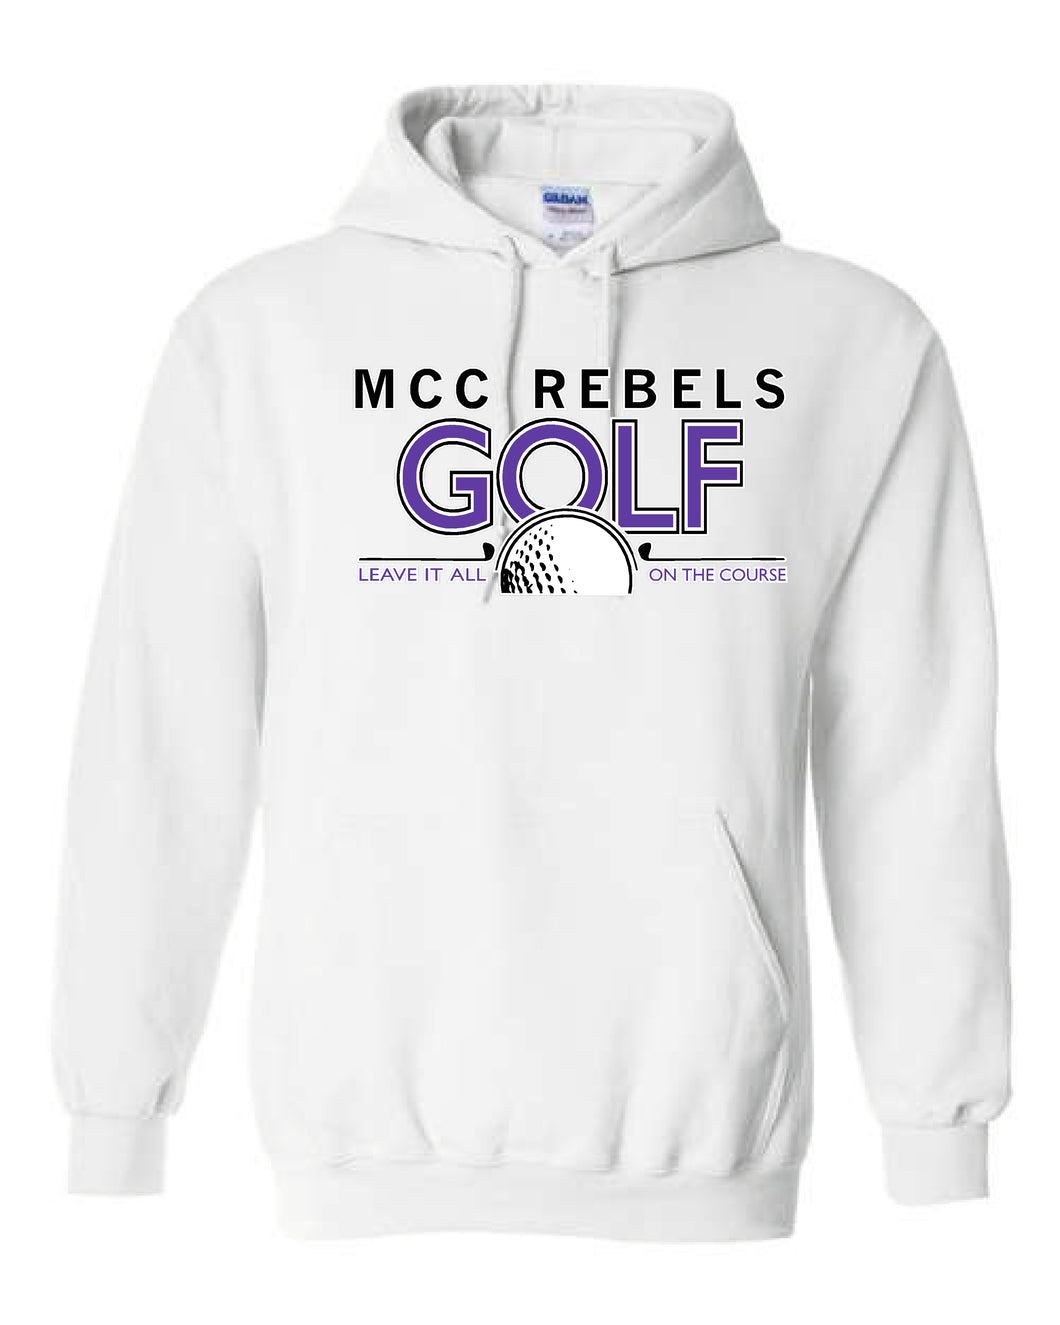 MCC Rebels Golf Gildan Sweatshirt - White